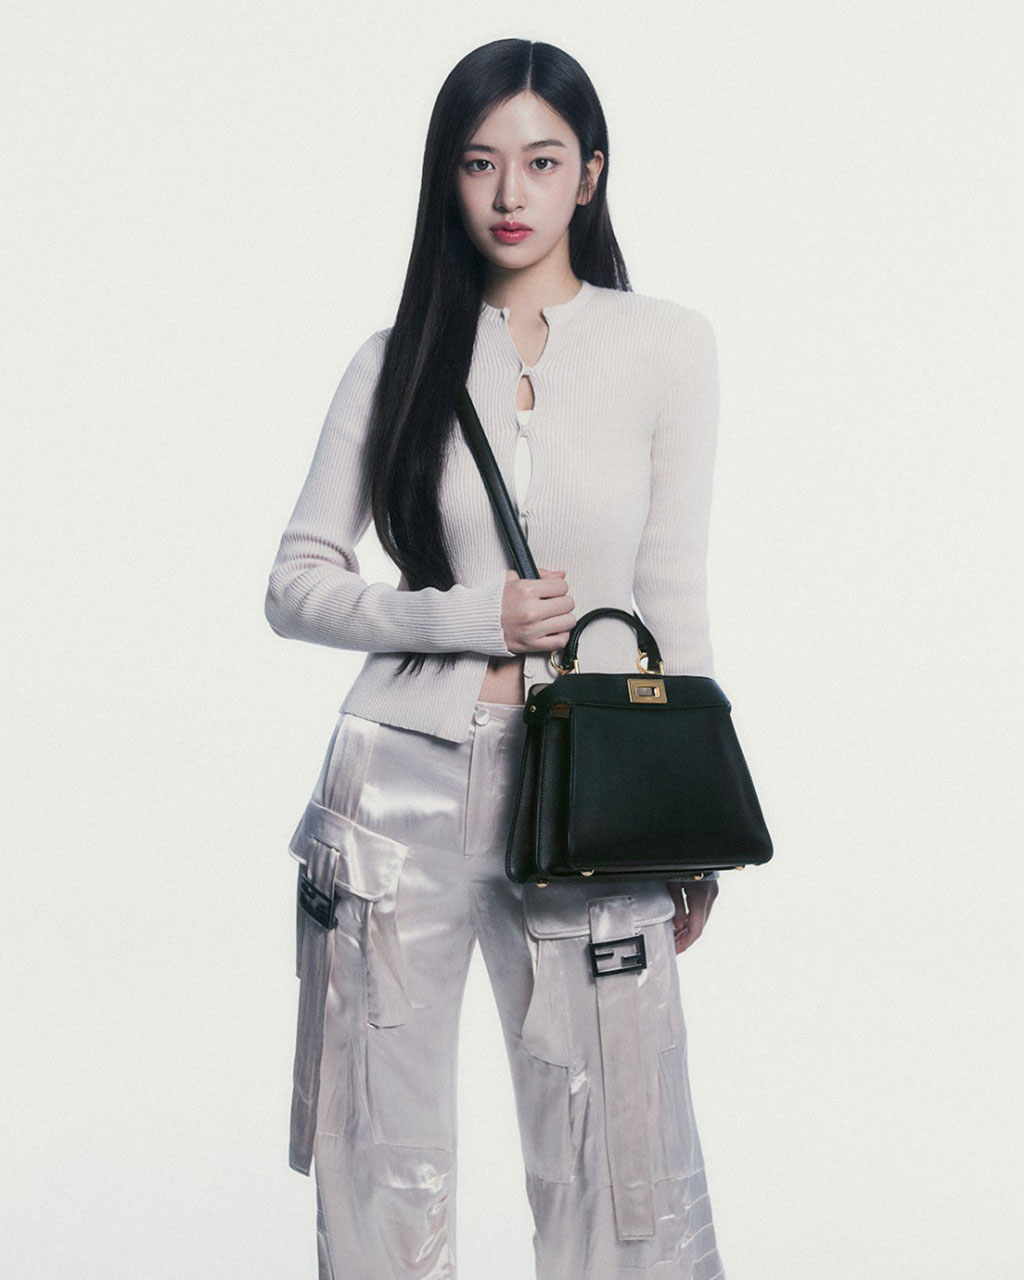 Yujin (Ive) on the cover of harper's bazaar, "warming up" as a Fendi ambassador